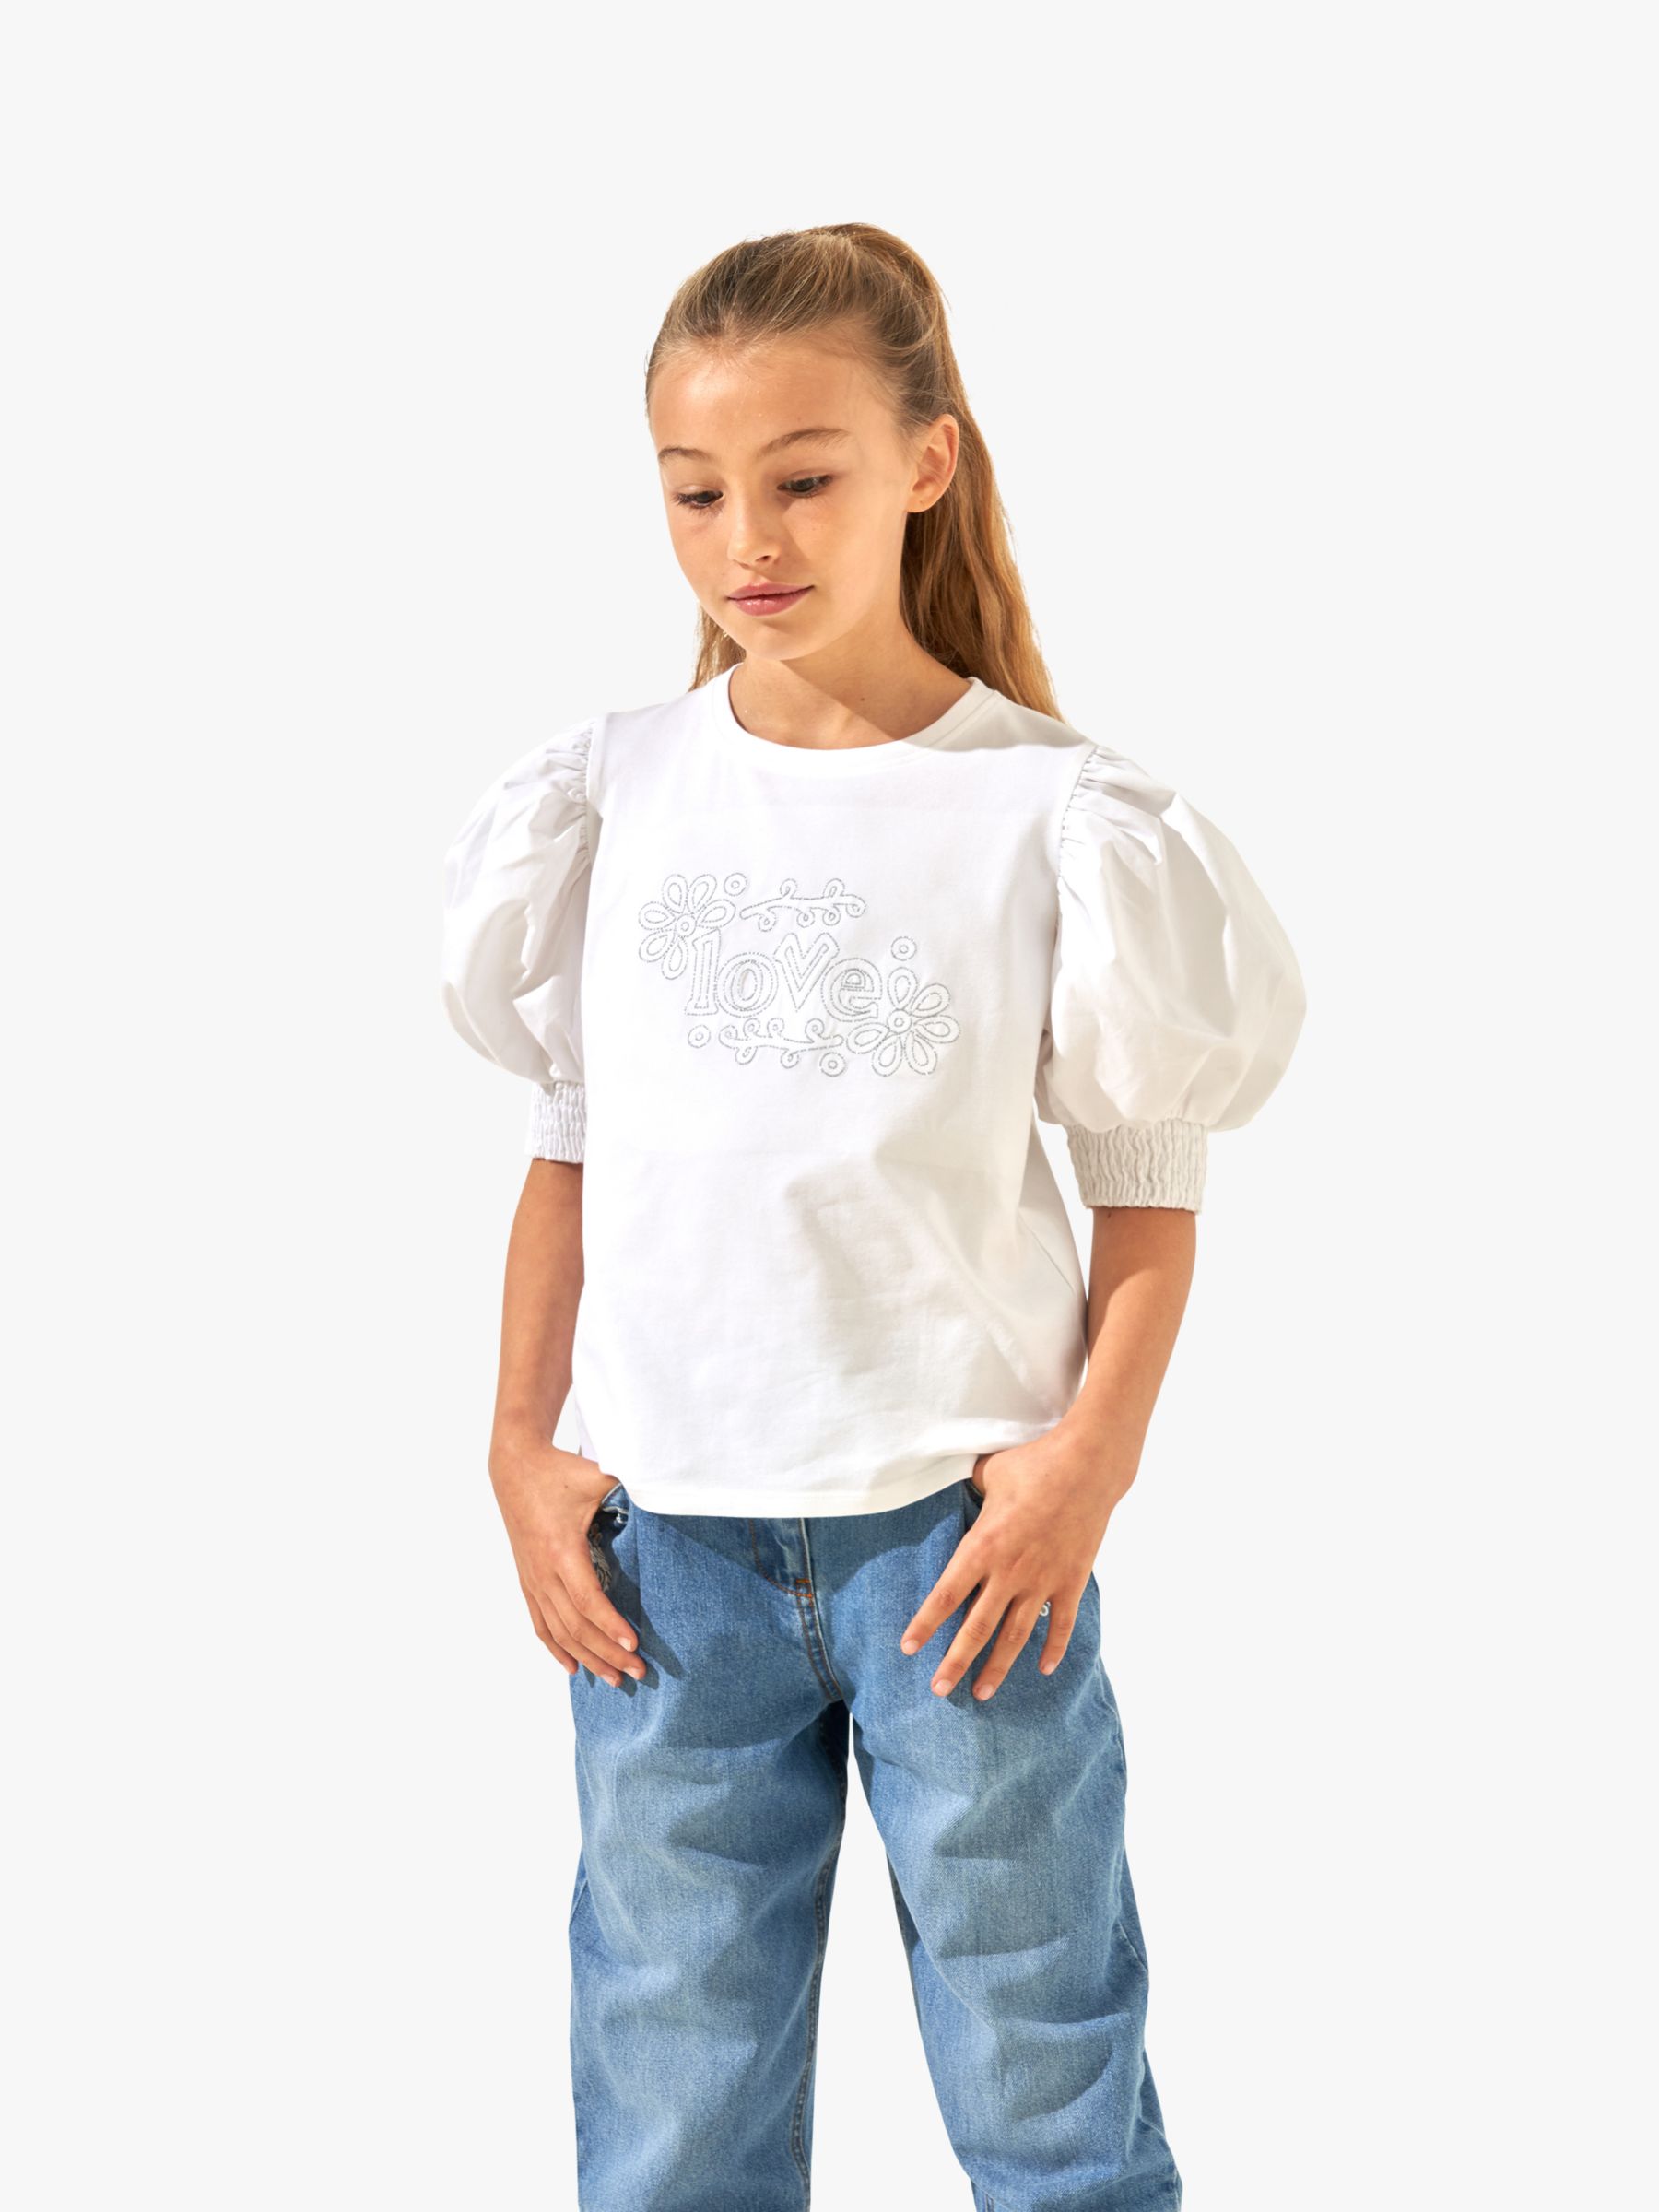 Angel & Rocket Kids' Embellished Love Puff Sleeve Top, White/Silver, 11-12 years